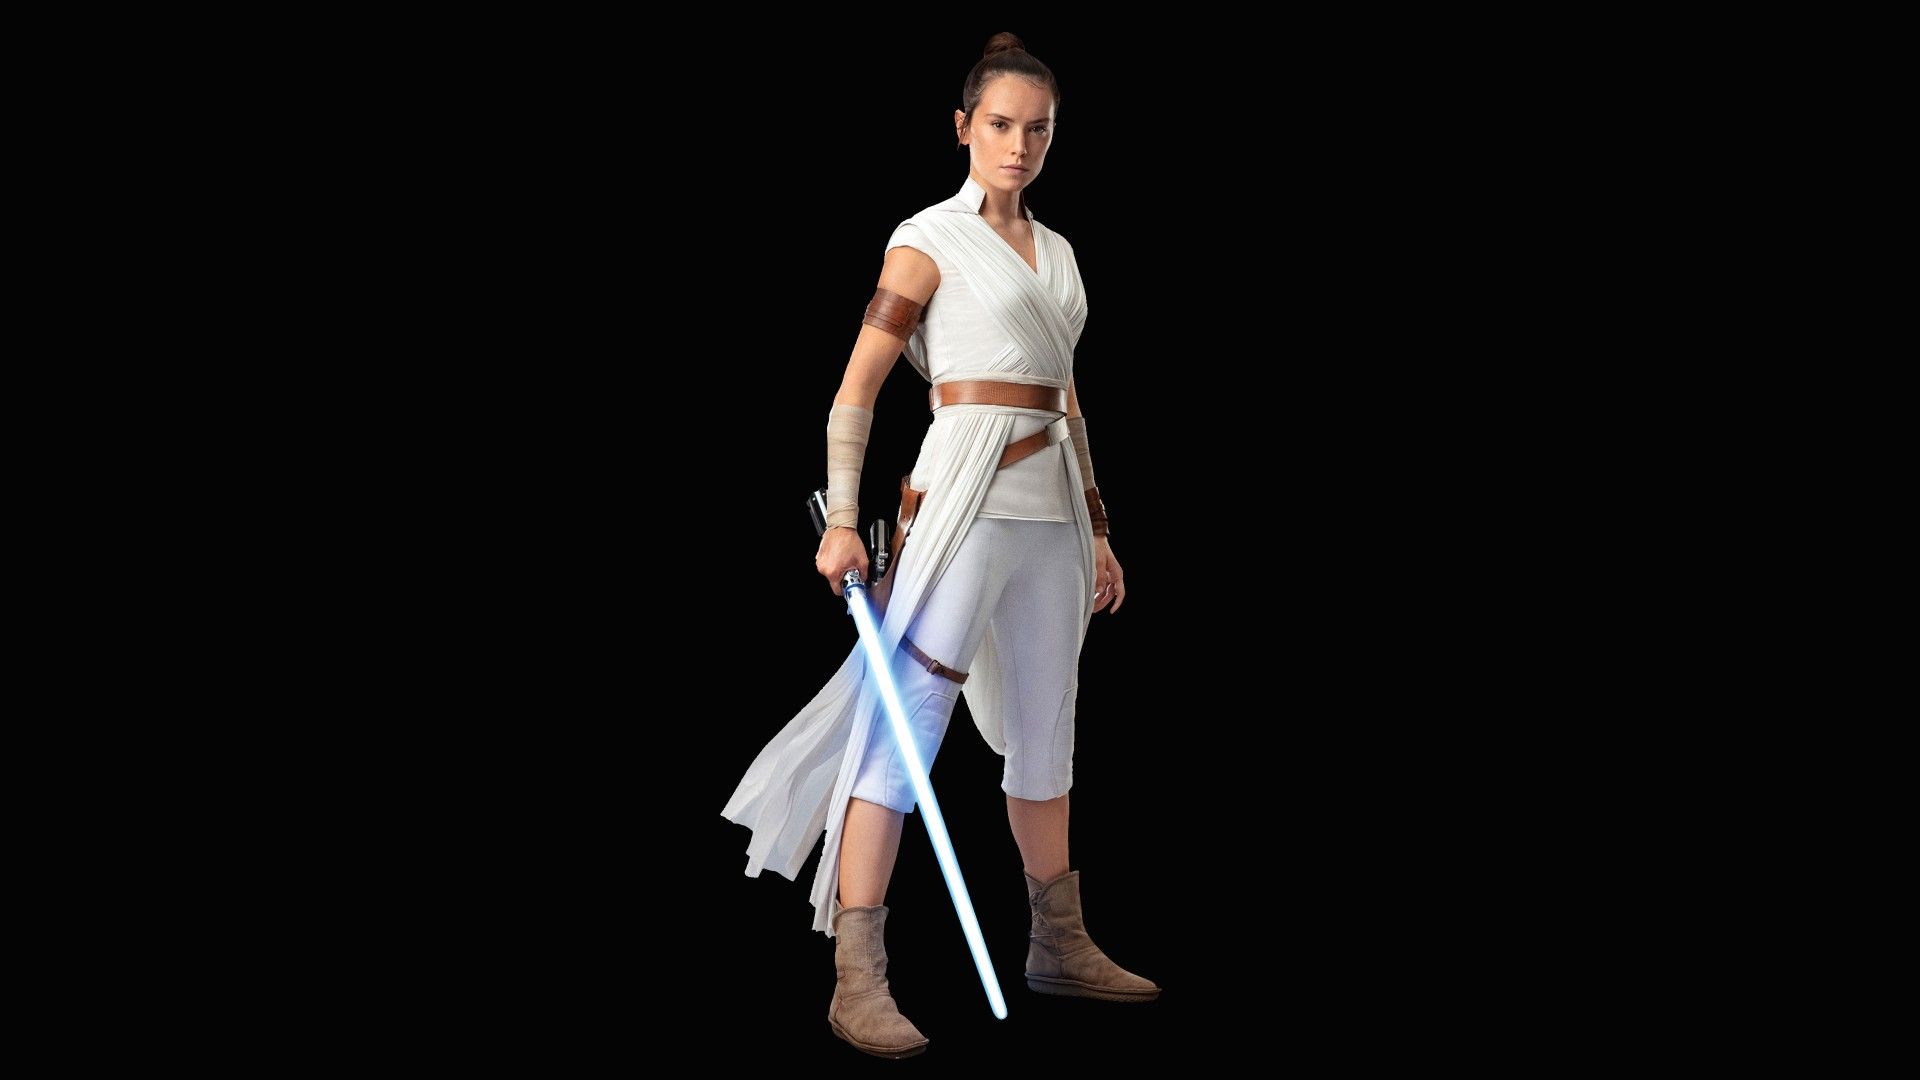 Rey 4K Wallpaper, Daisy Ridley, Star Wars: The Rise of Skywalker, Black background, 5K, 8K, Movies